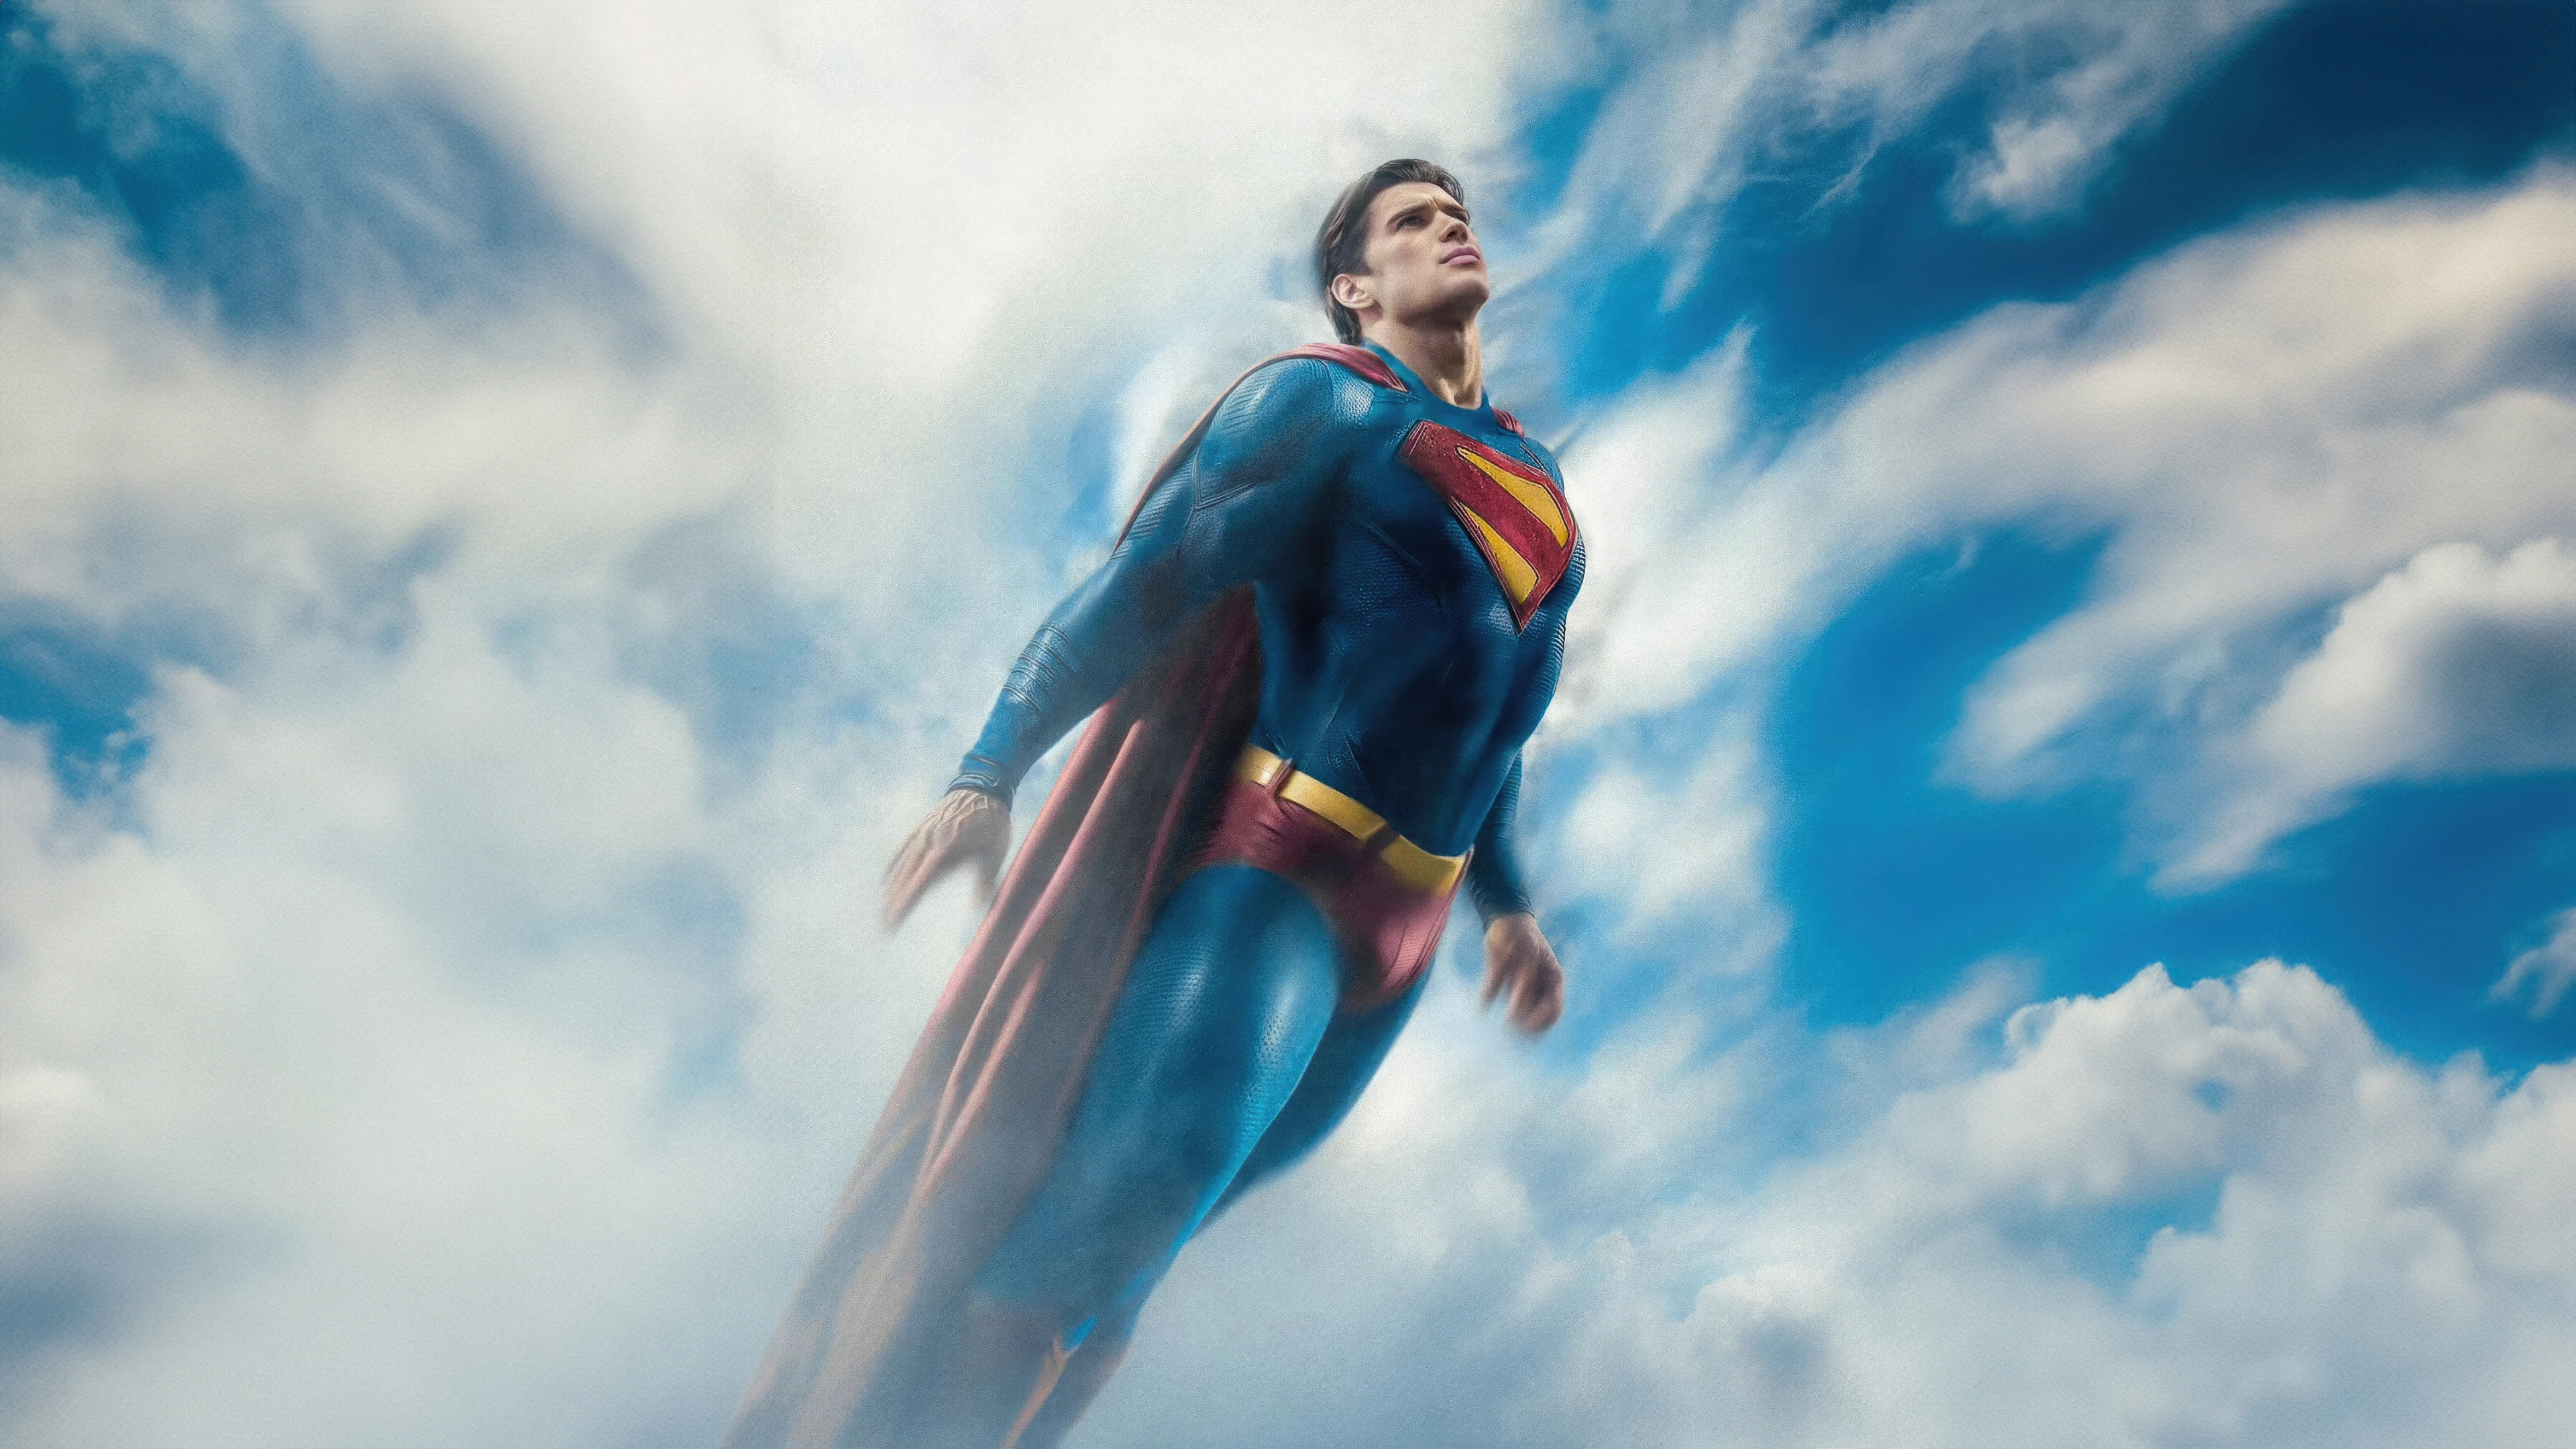 david corenswet in superman movie cc.jpg